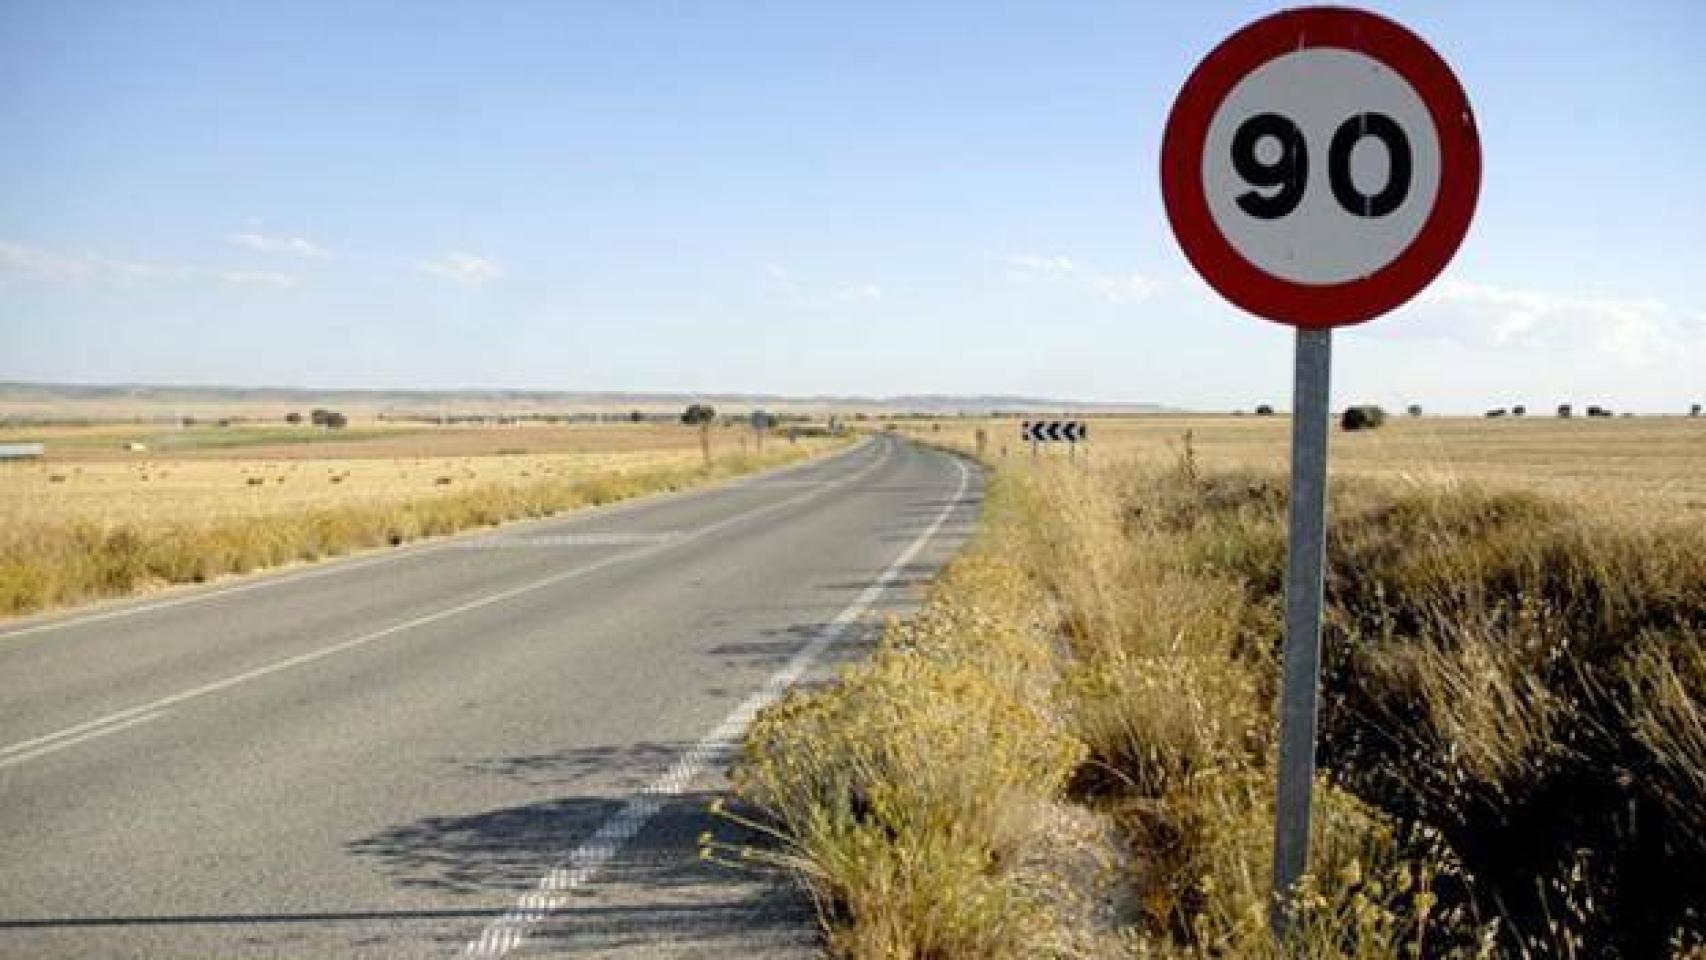 Señal de tráfico que indica prohibición de circular a más de 90 km/h